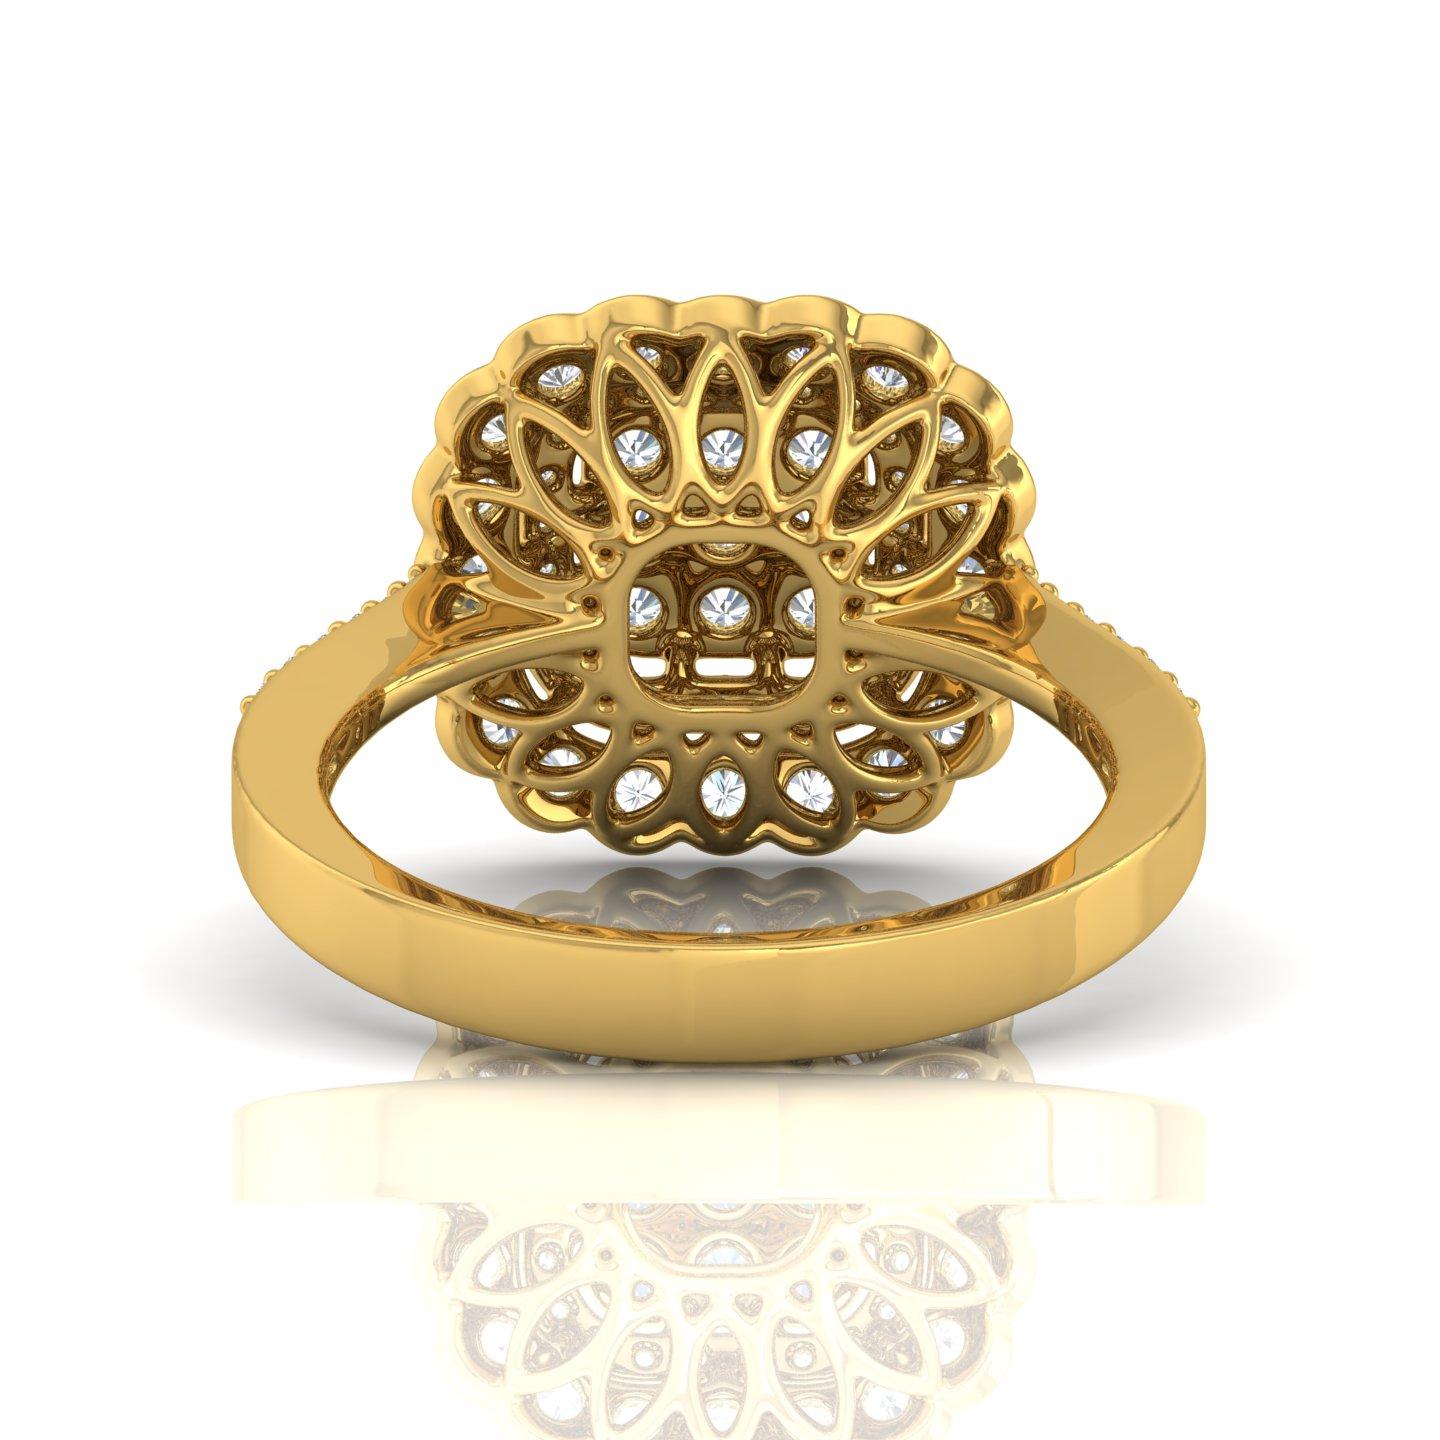 For Sale:  0.95 Carat SI Clarity HI Color Diamond Ring 18 Karat Yellow Gold Fine Jewelry 5